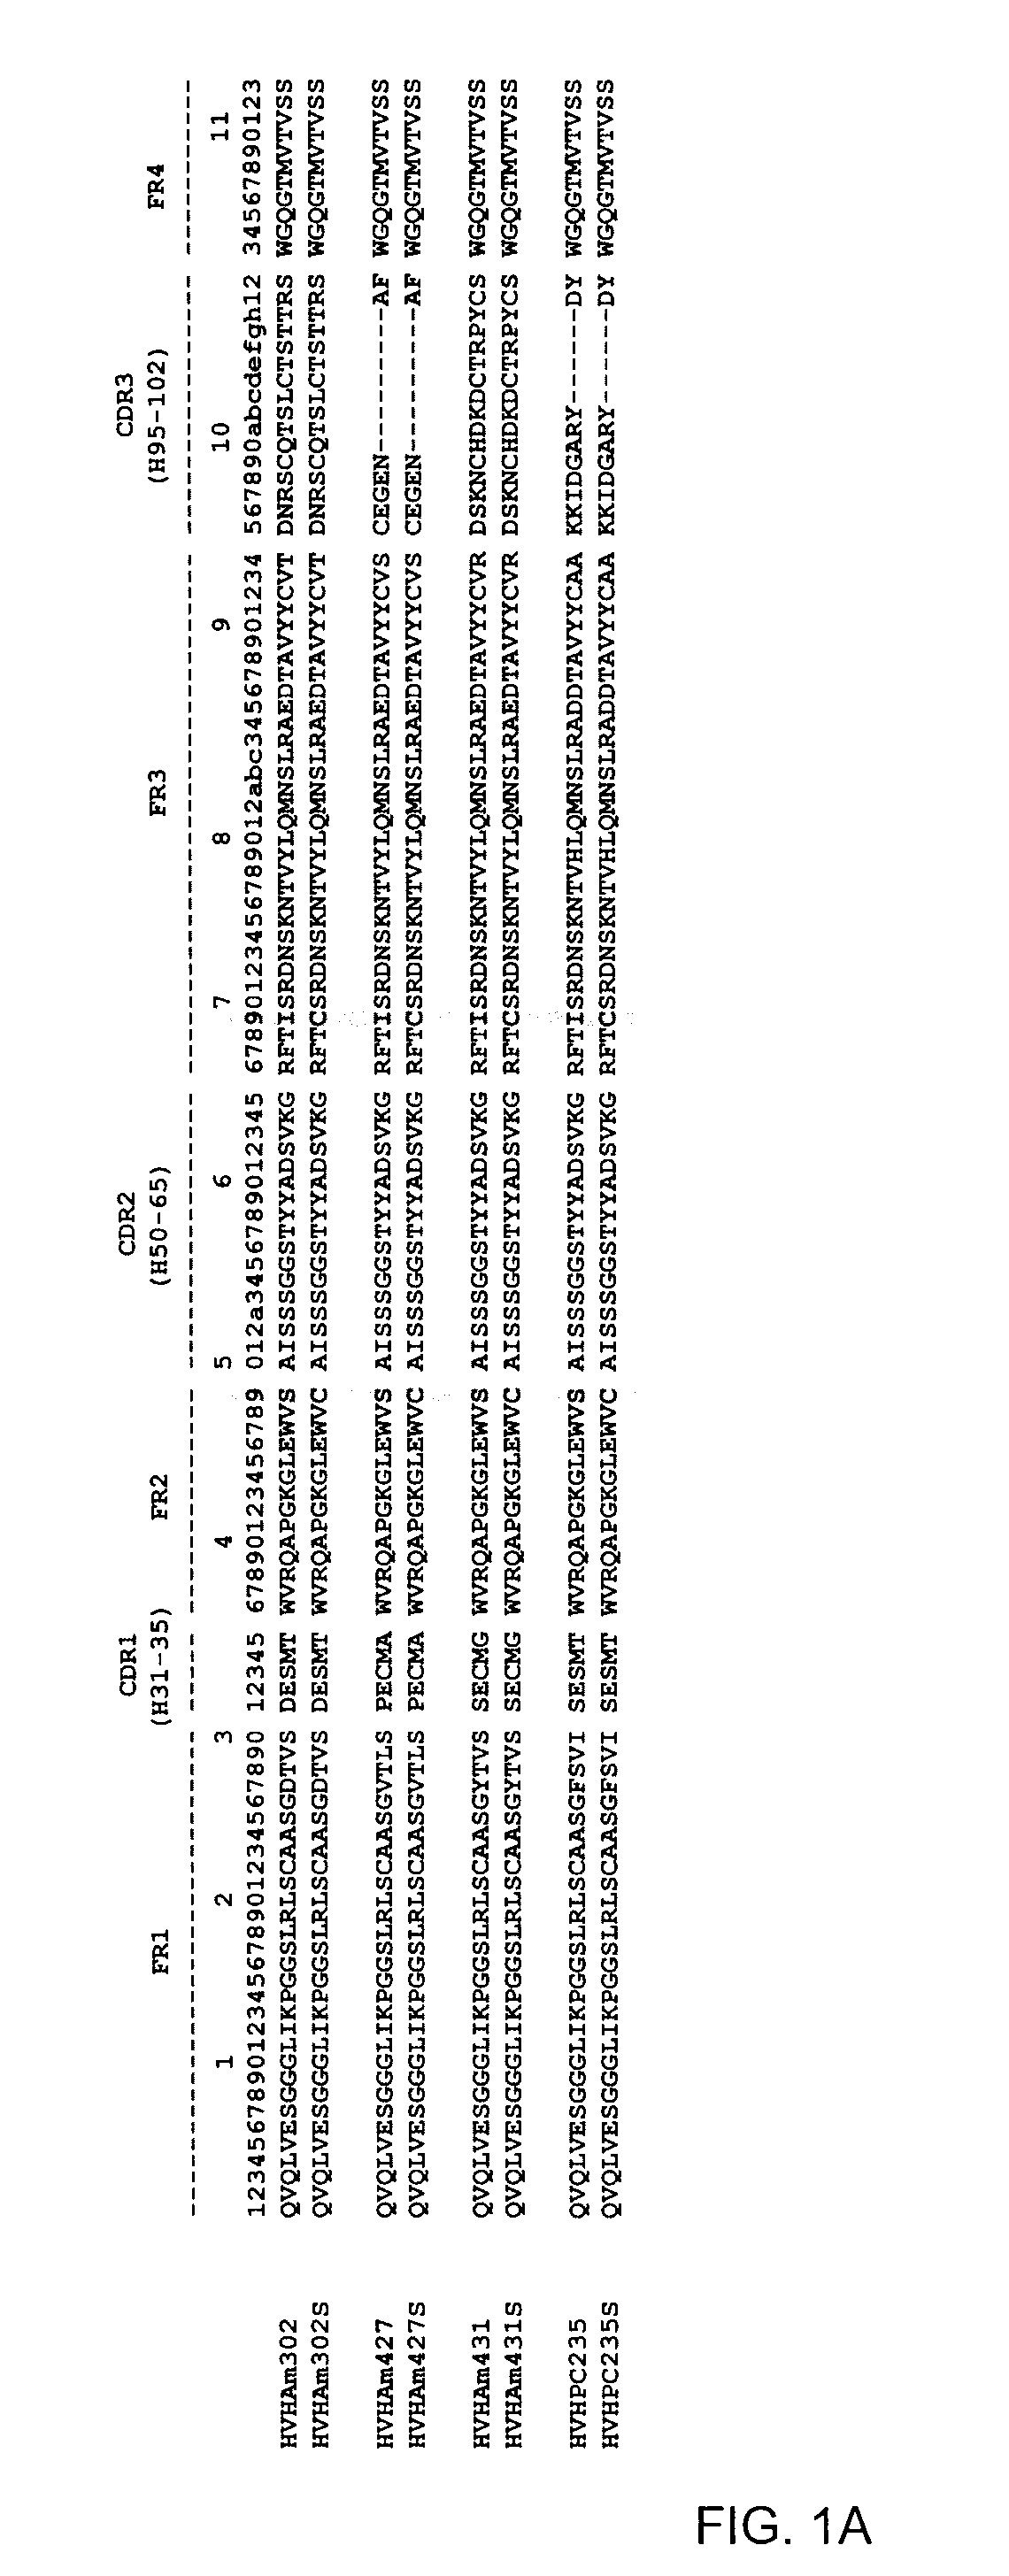 Engineering of immunoglobulin domains